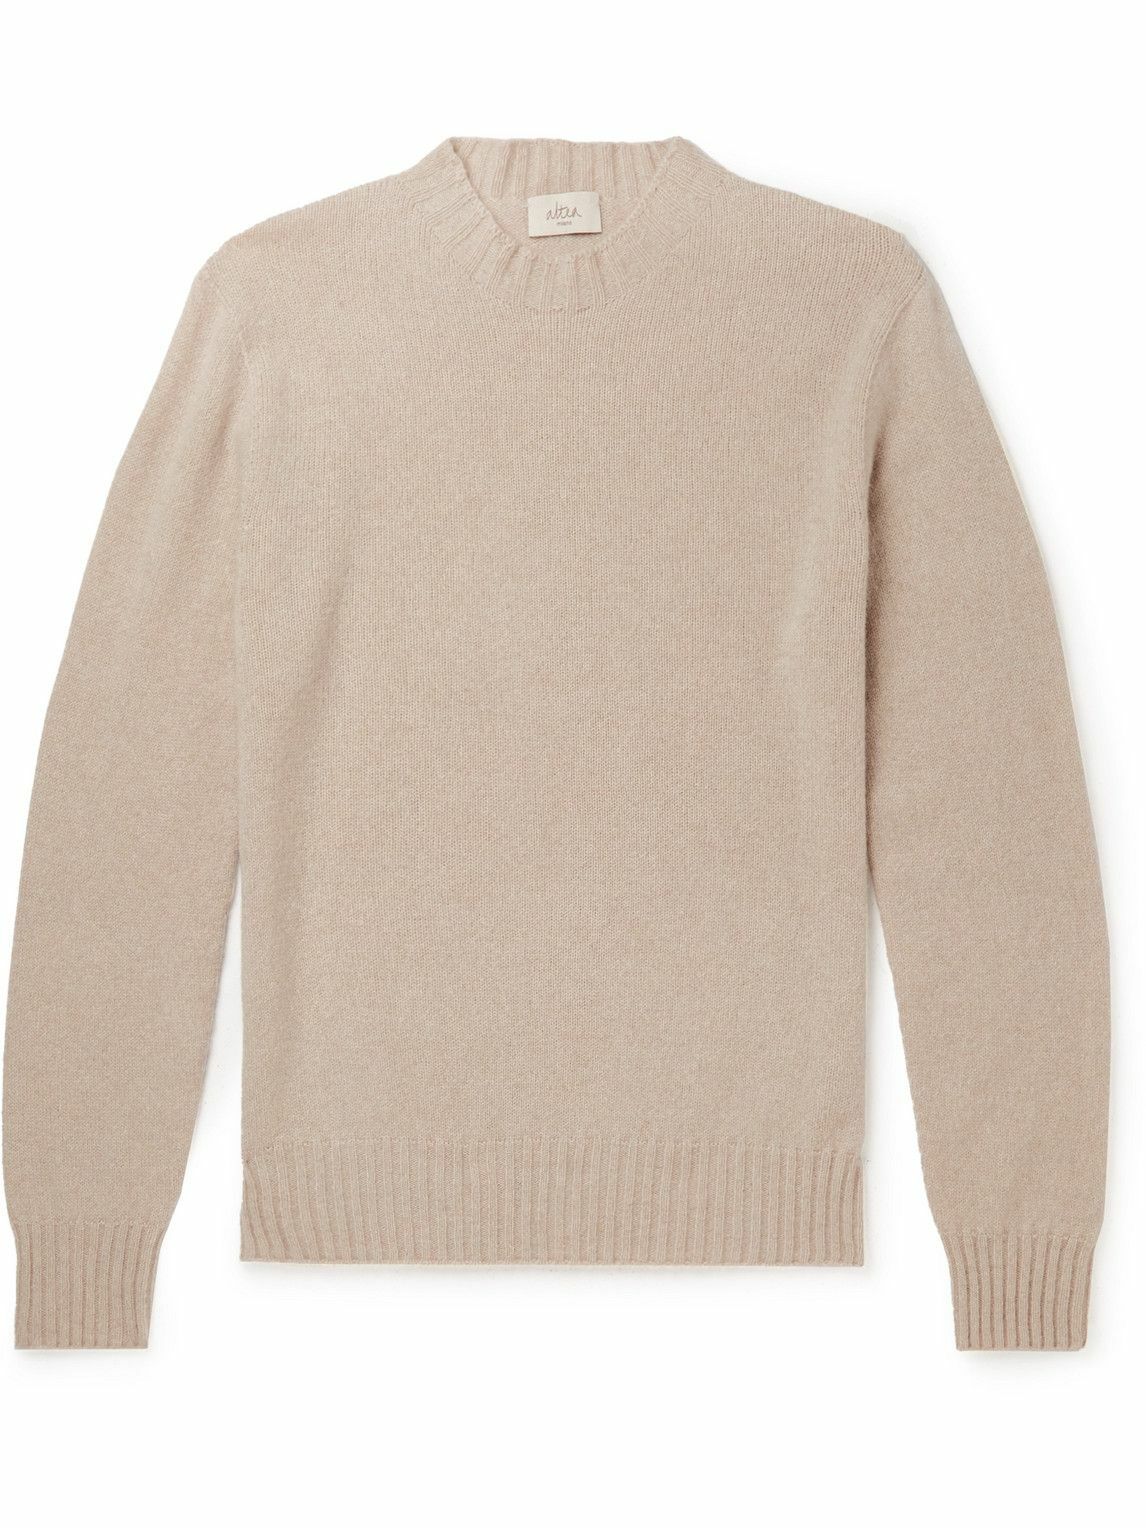 Altea - Cashmere-Blend Sweater - Neutrals Altea